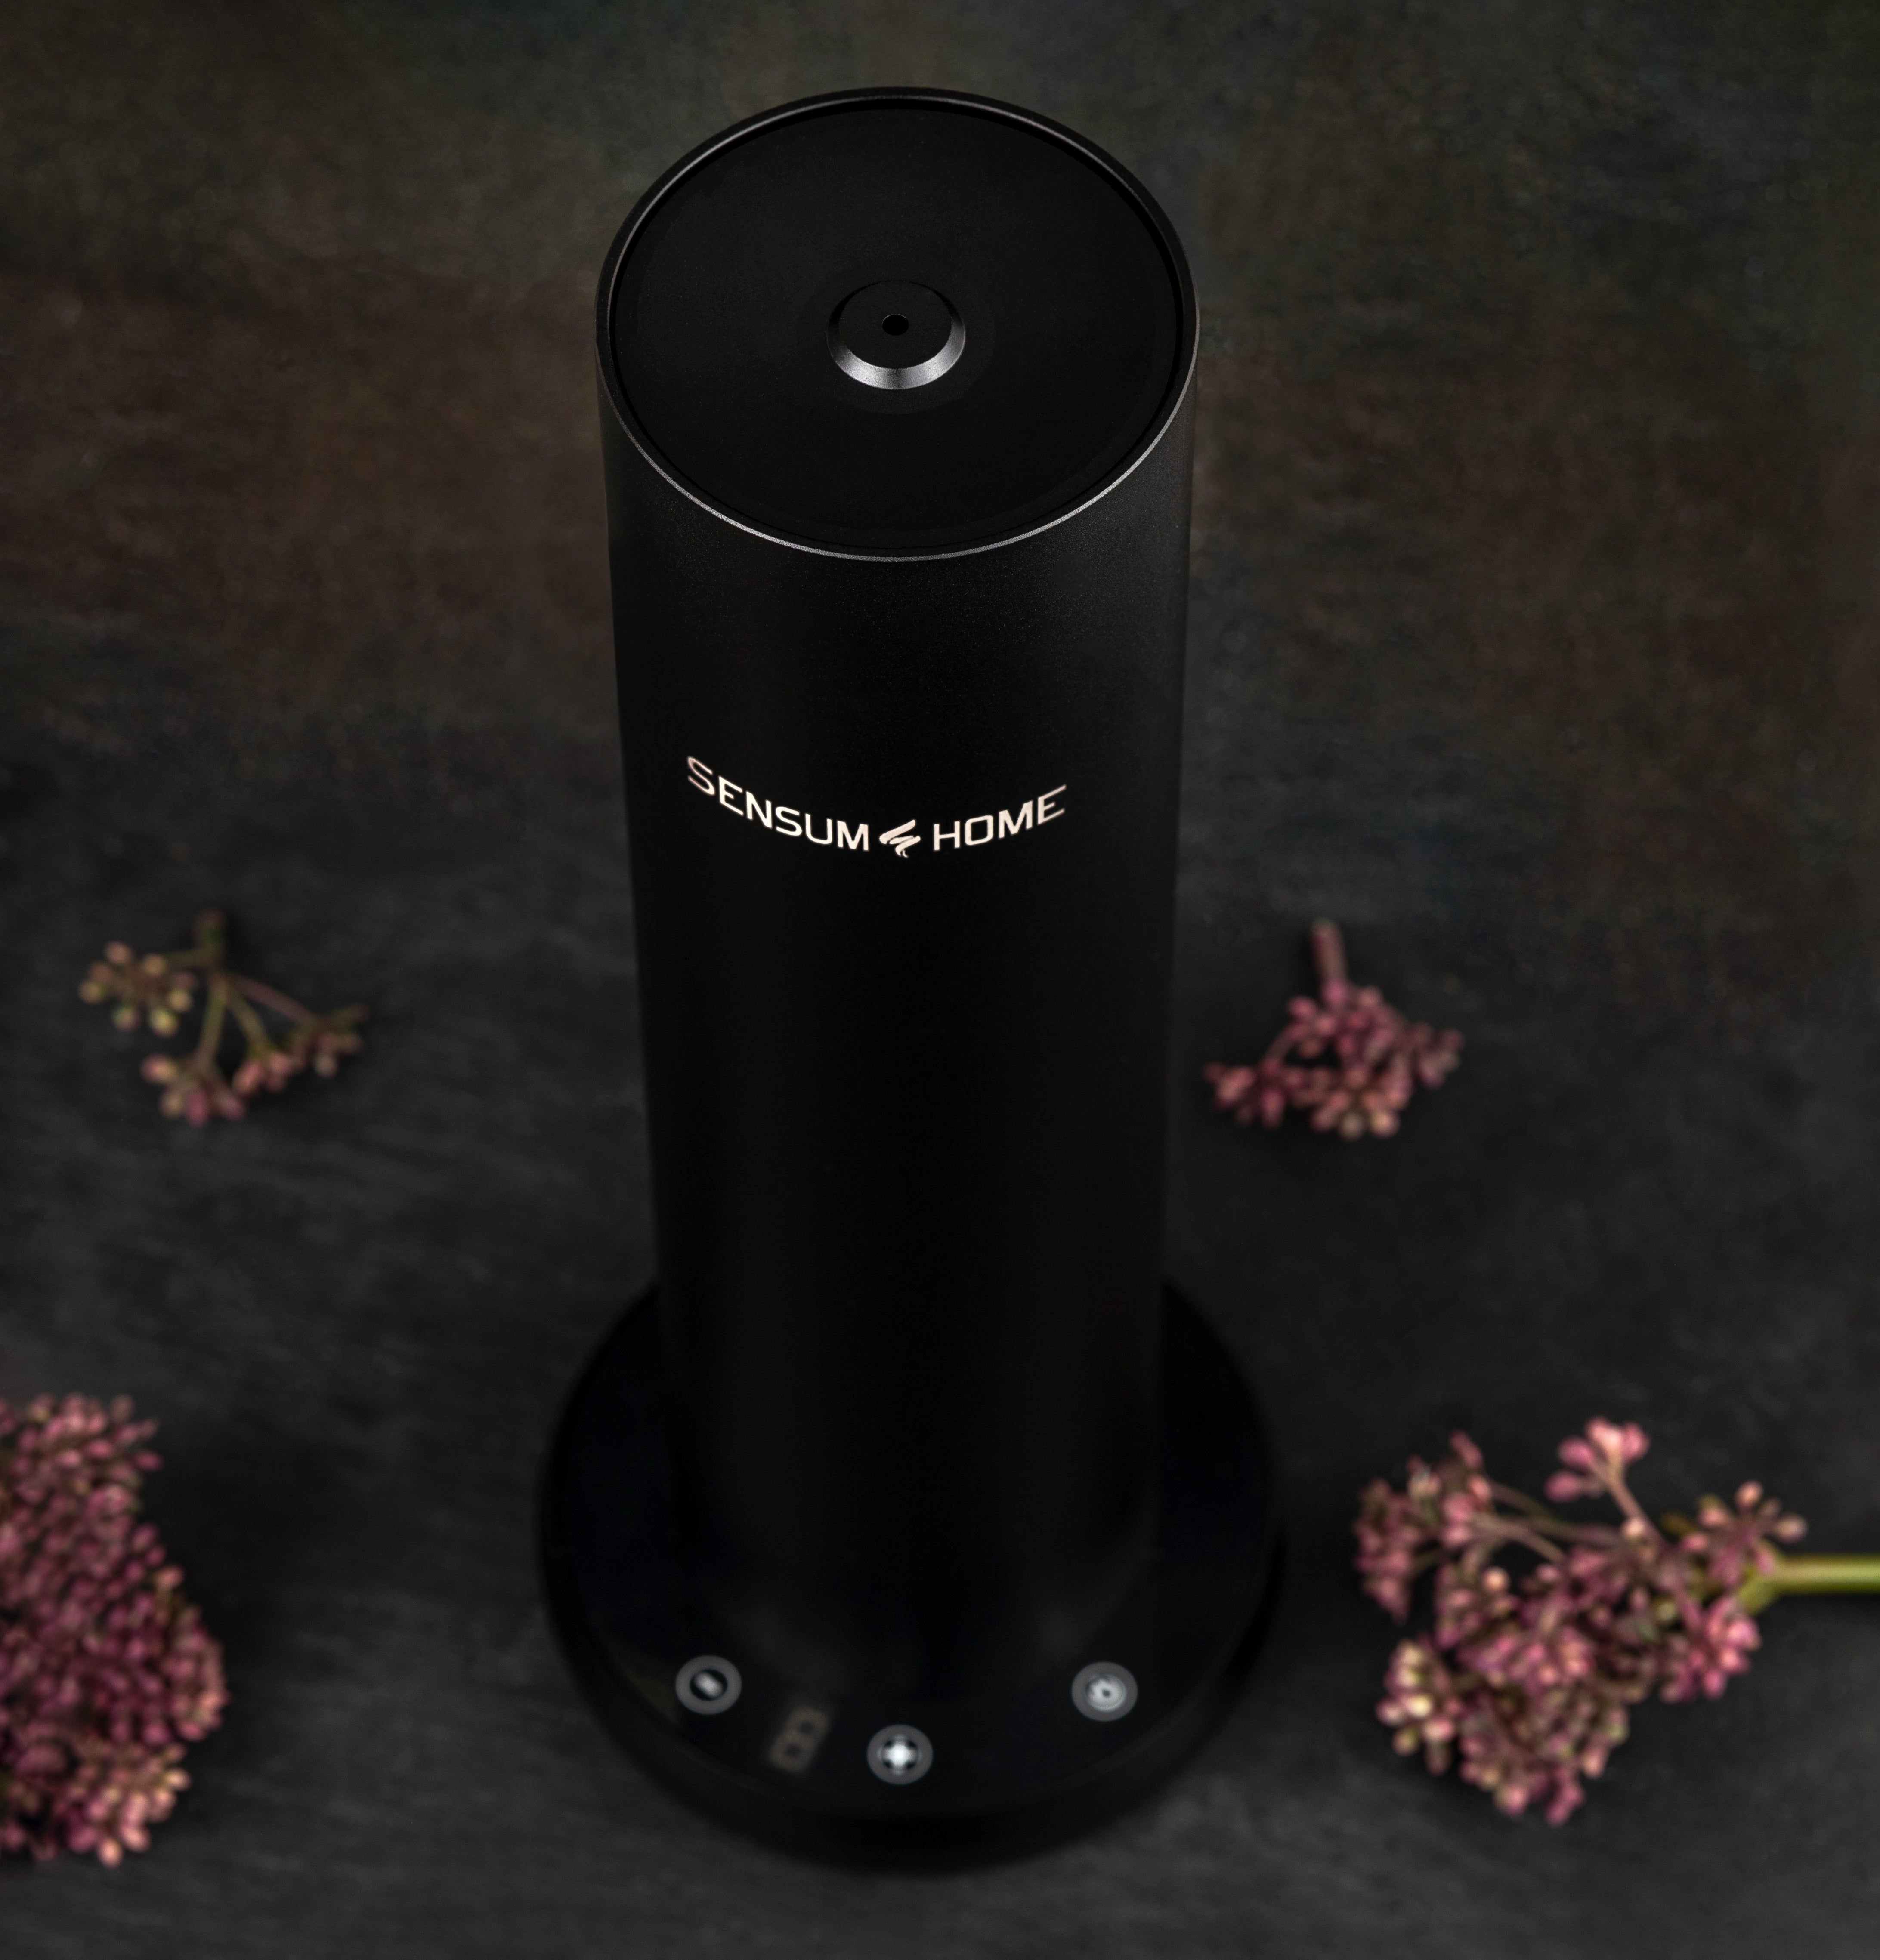 Sensum Home SCENT TOWER Fragrance Machine